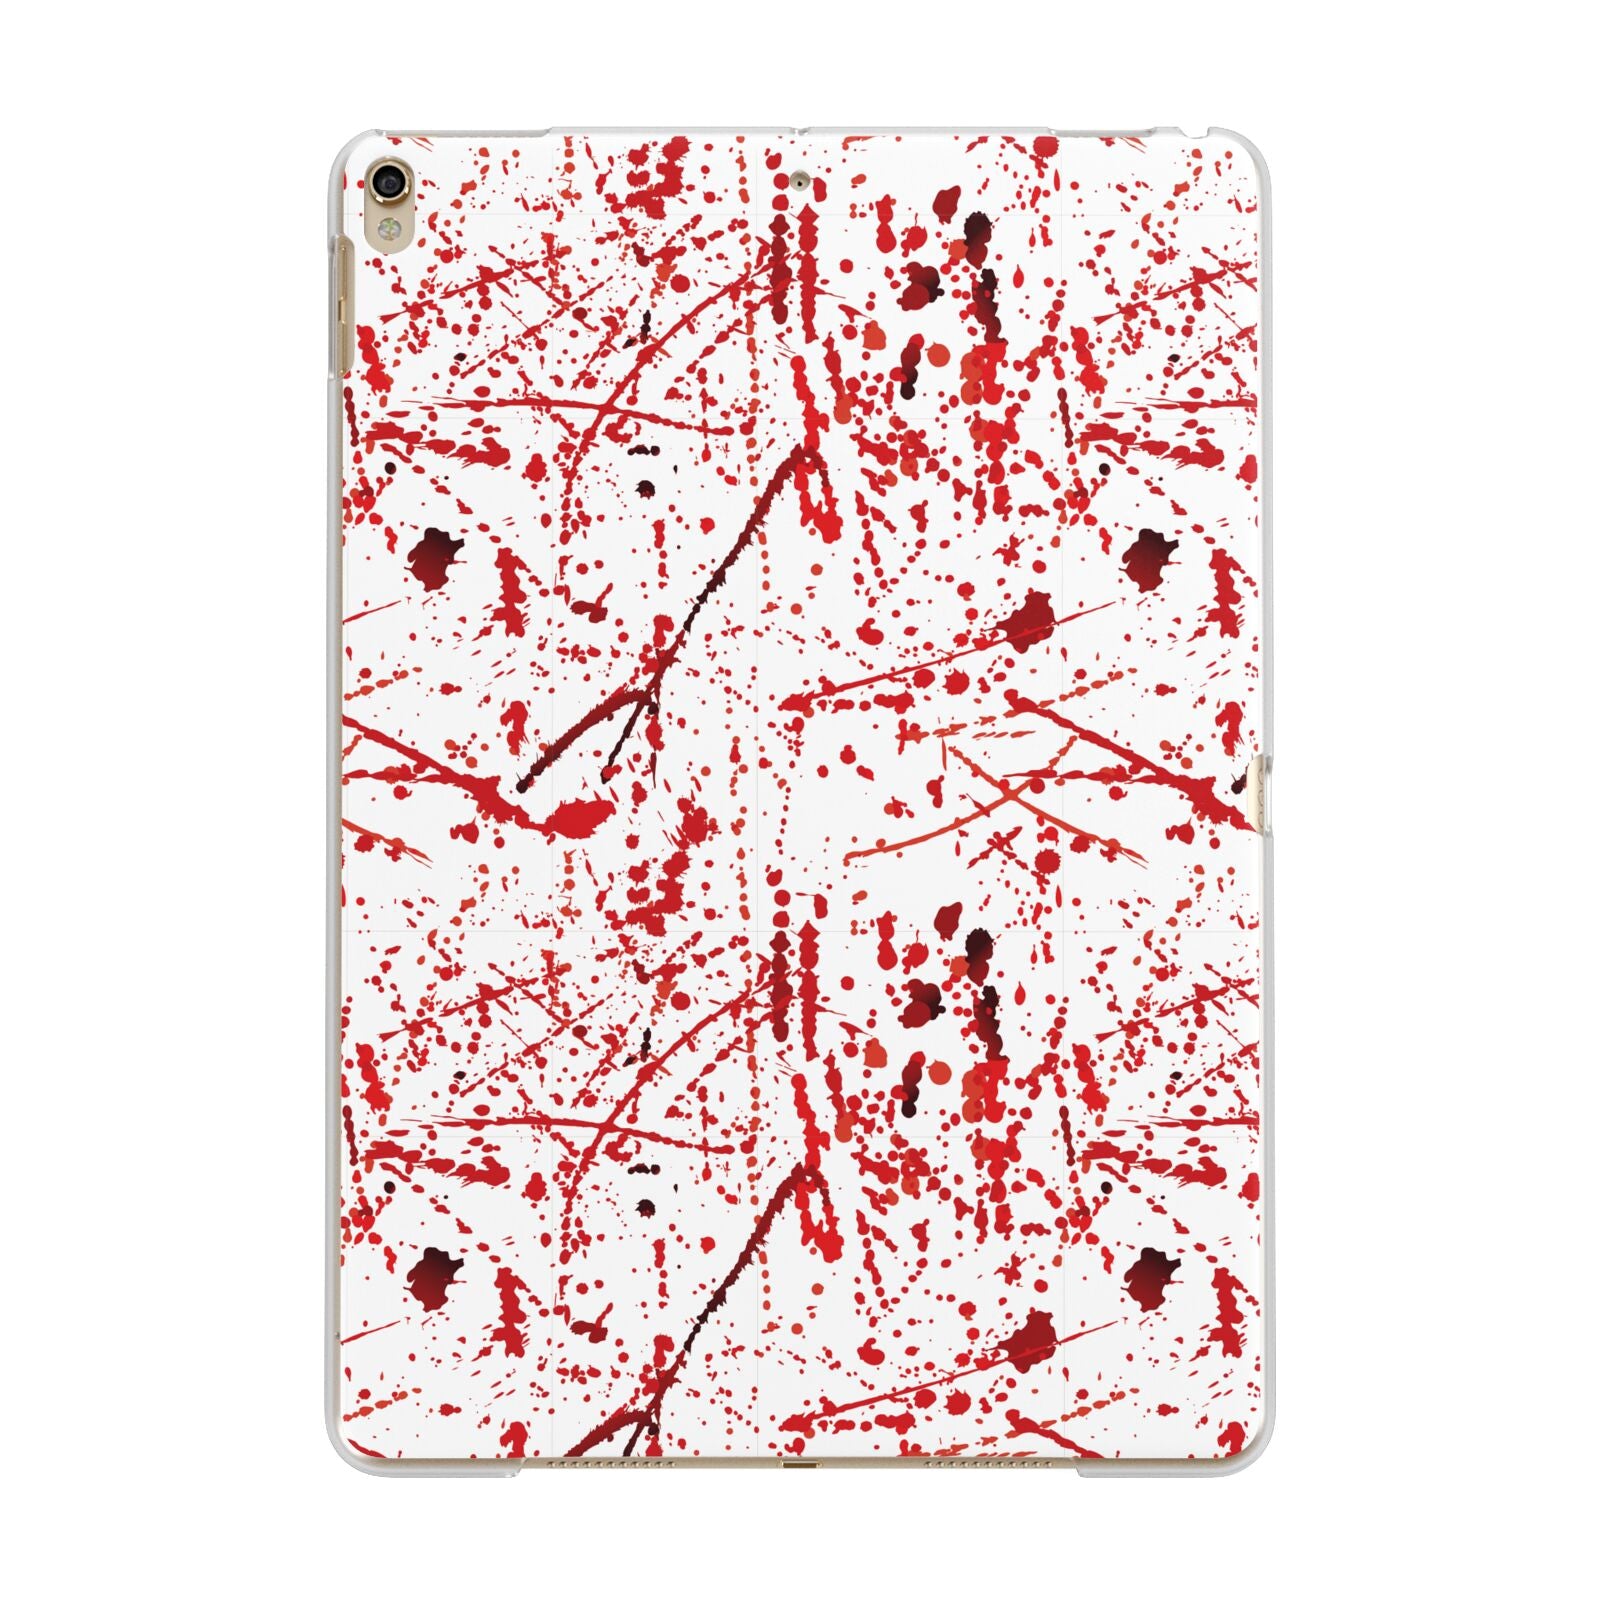 Blood Splatter Apple iPad Gold Case